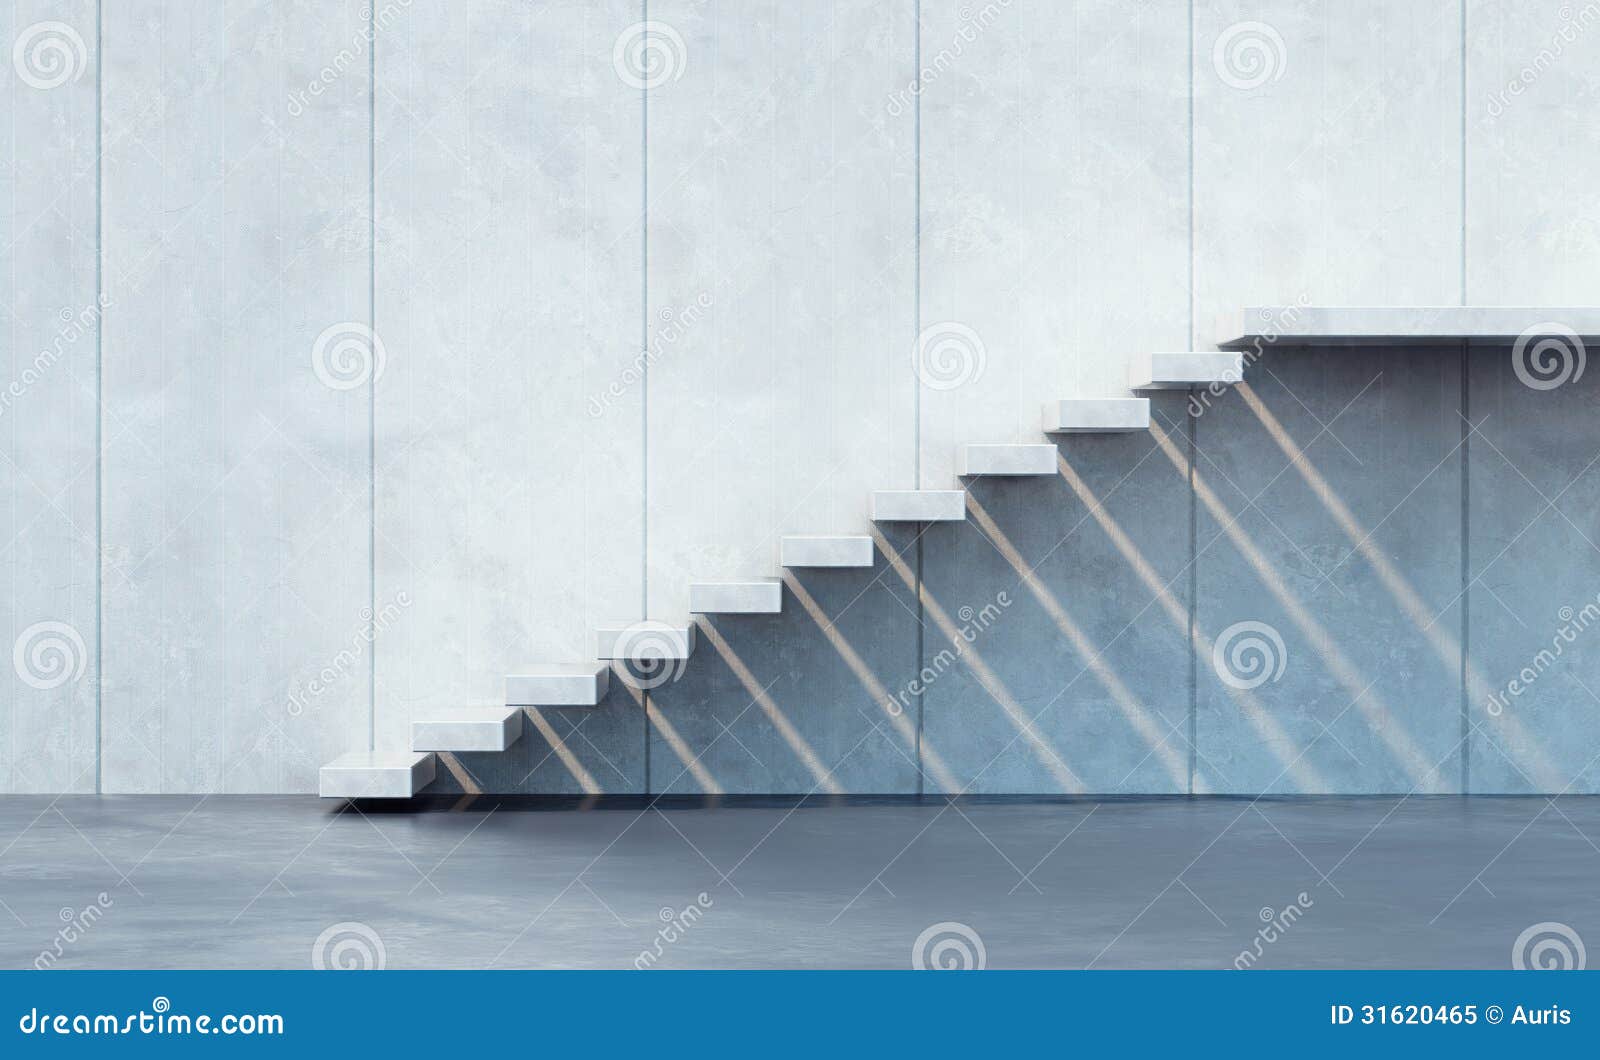 minimalism style stairs